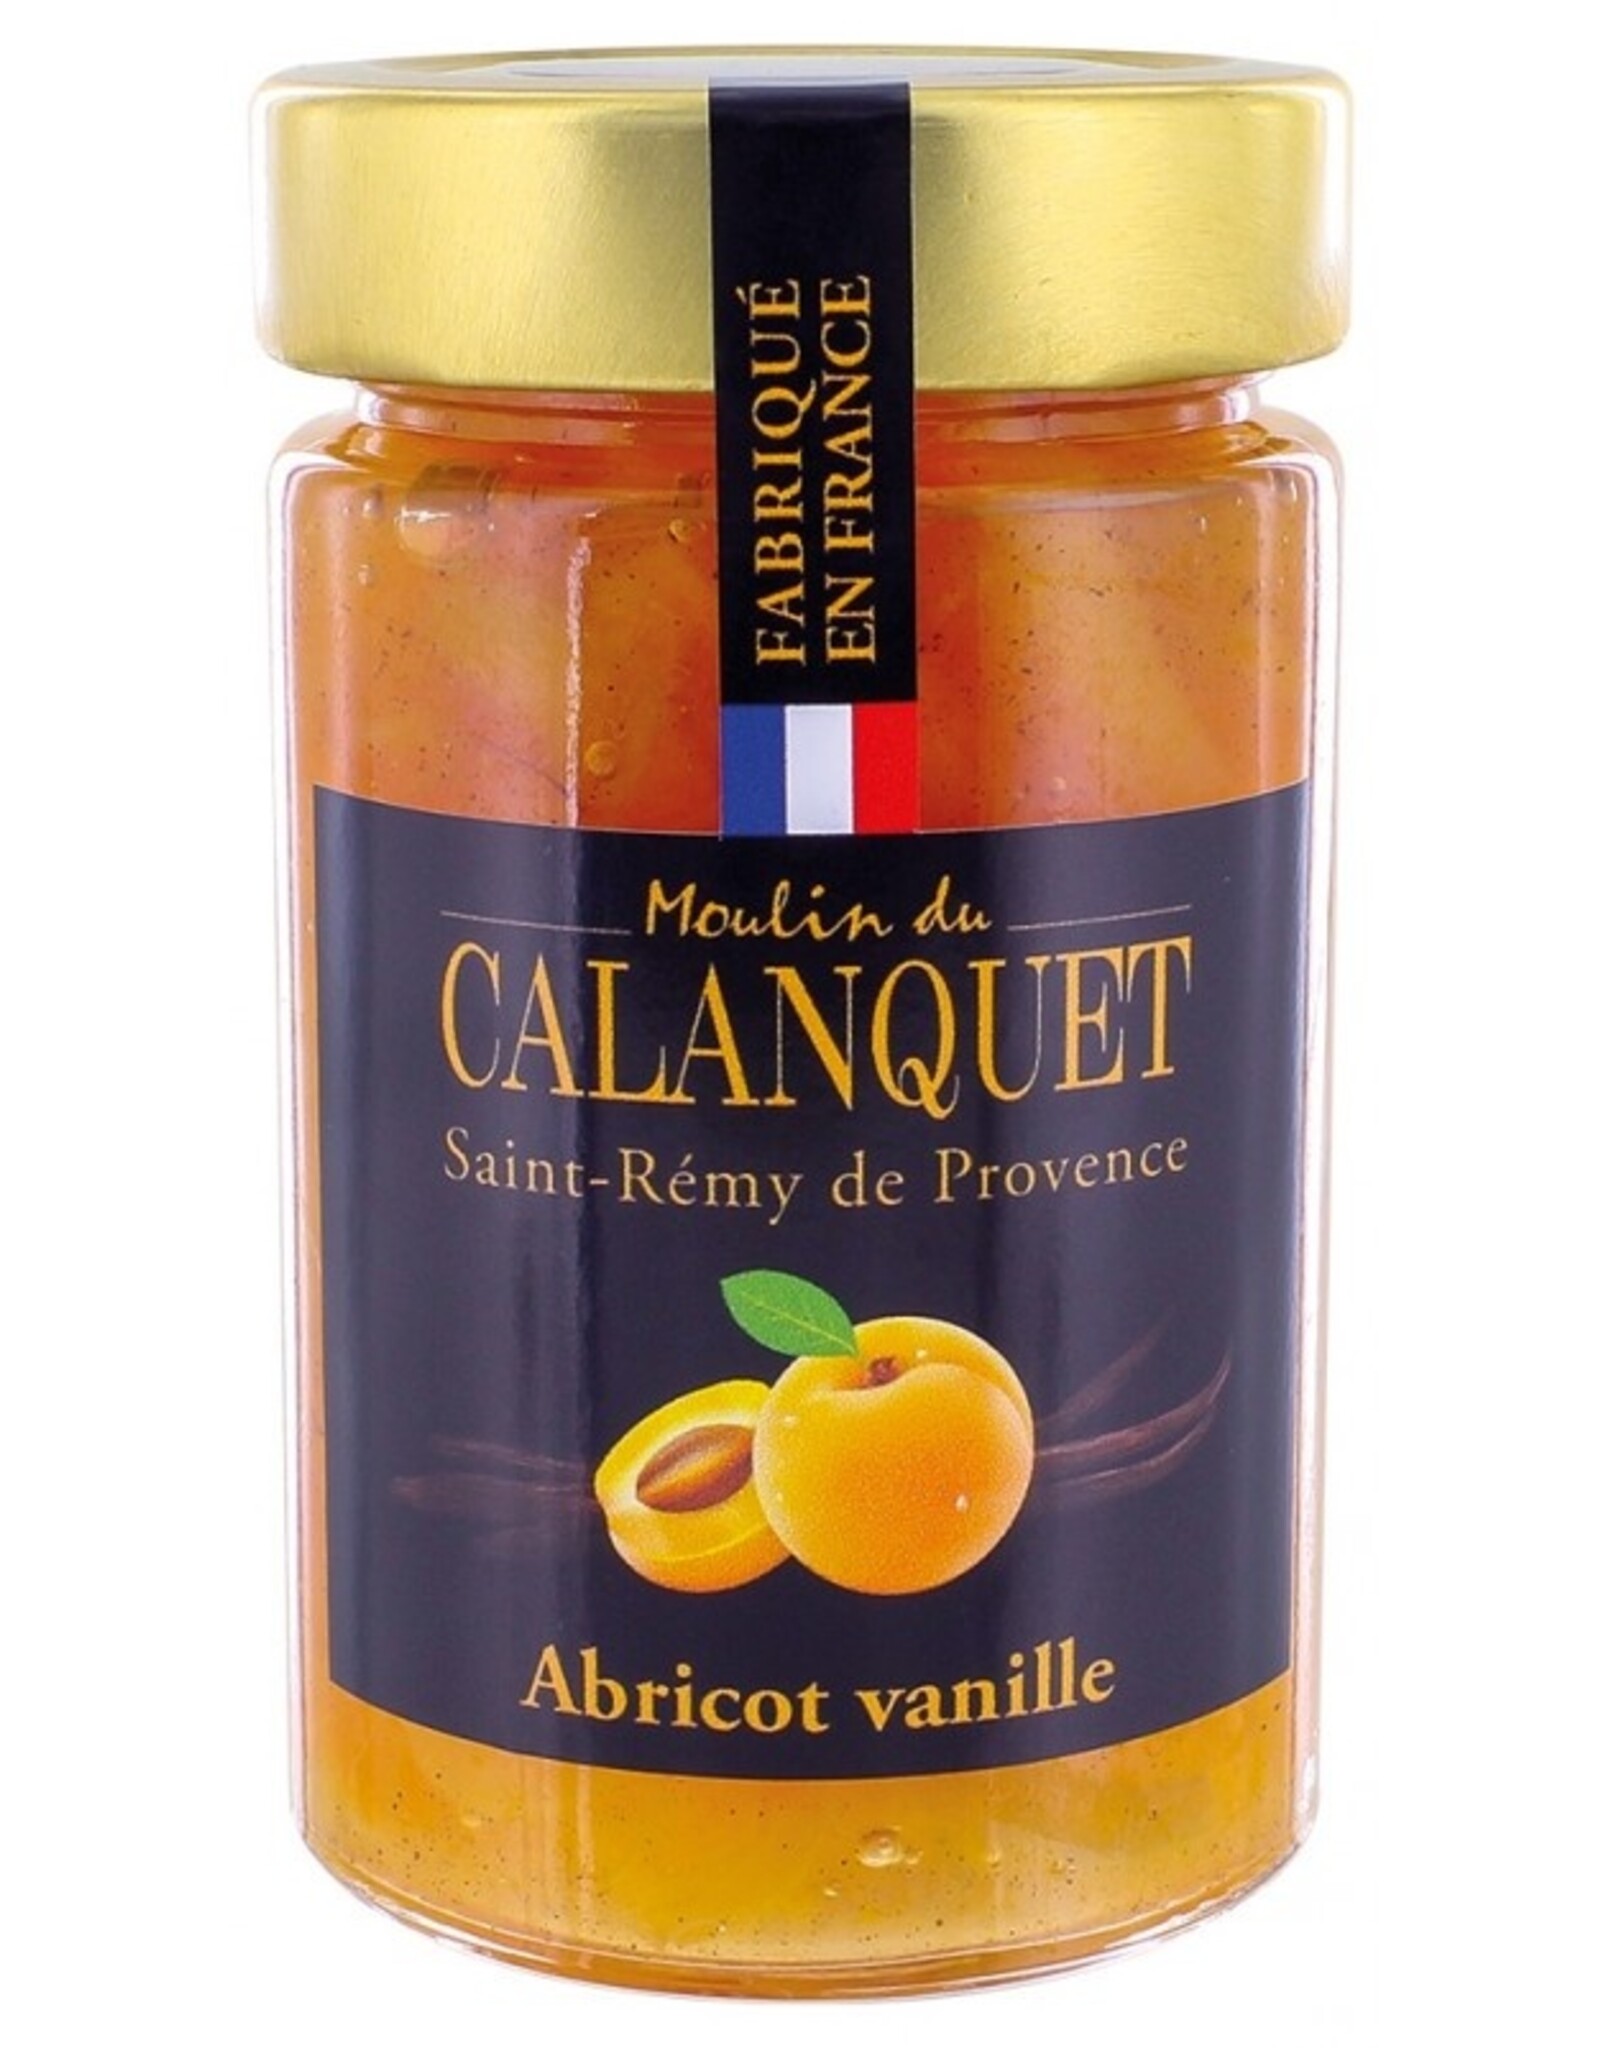 Moulin du Calanquet Confiture Abricot Vanille / Abricots & Vanilla Jam 220 g